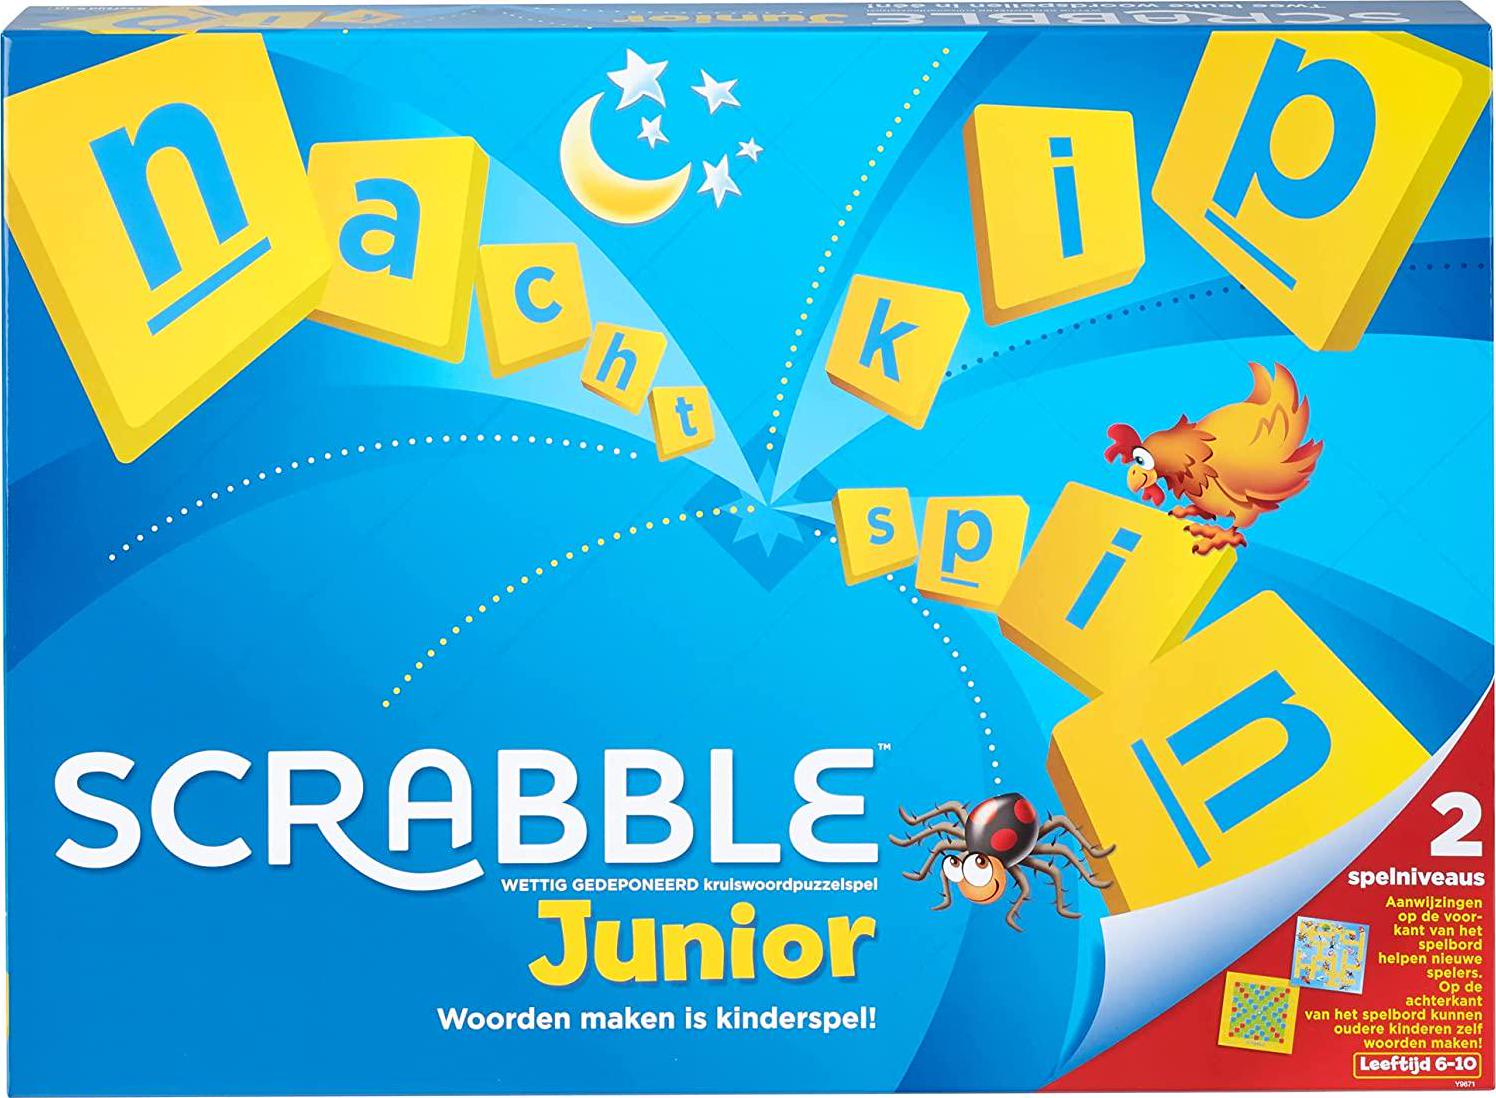 Mattel, Mattel Games Scrabble Junior Game